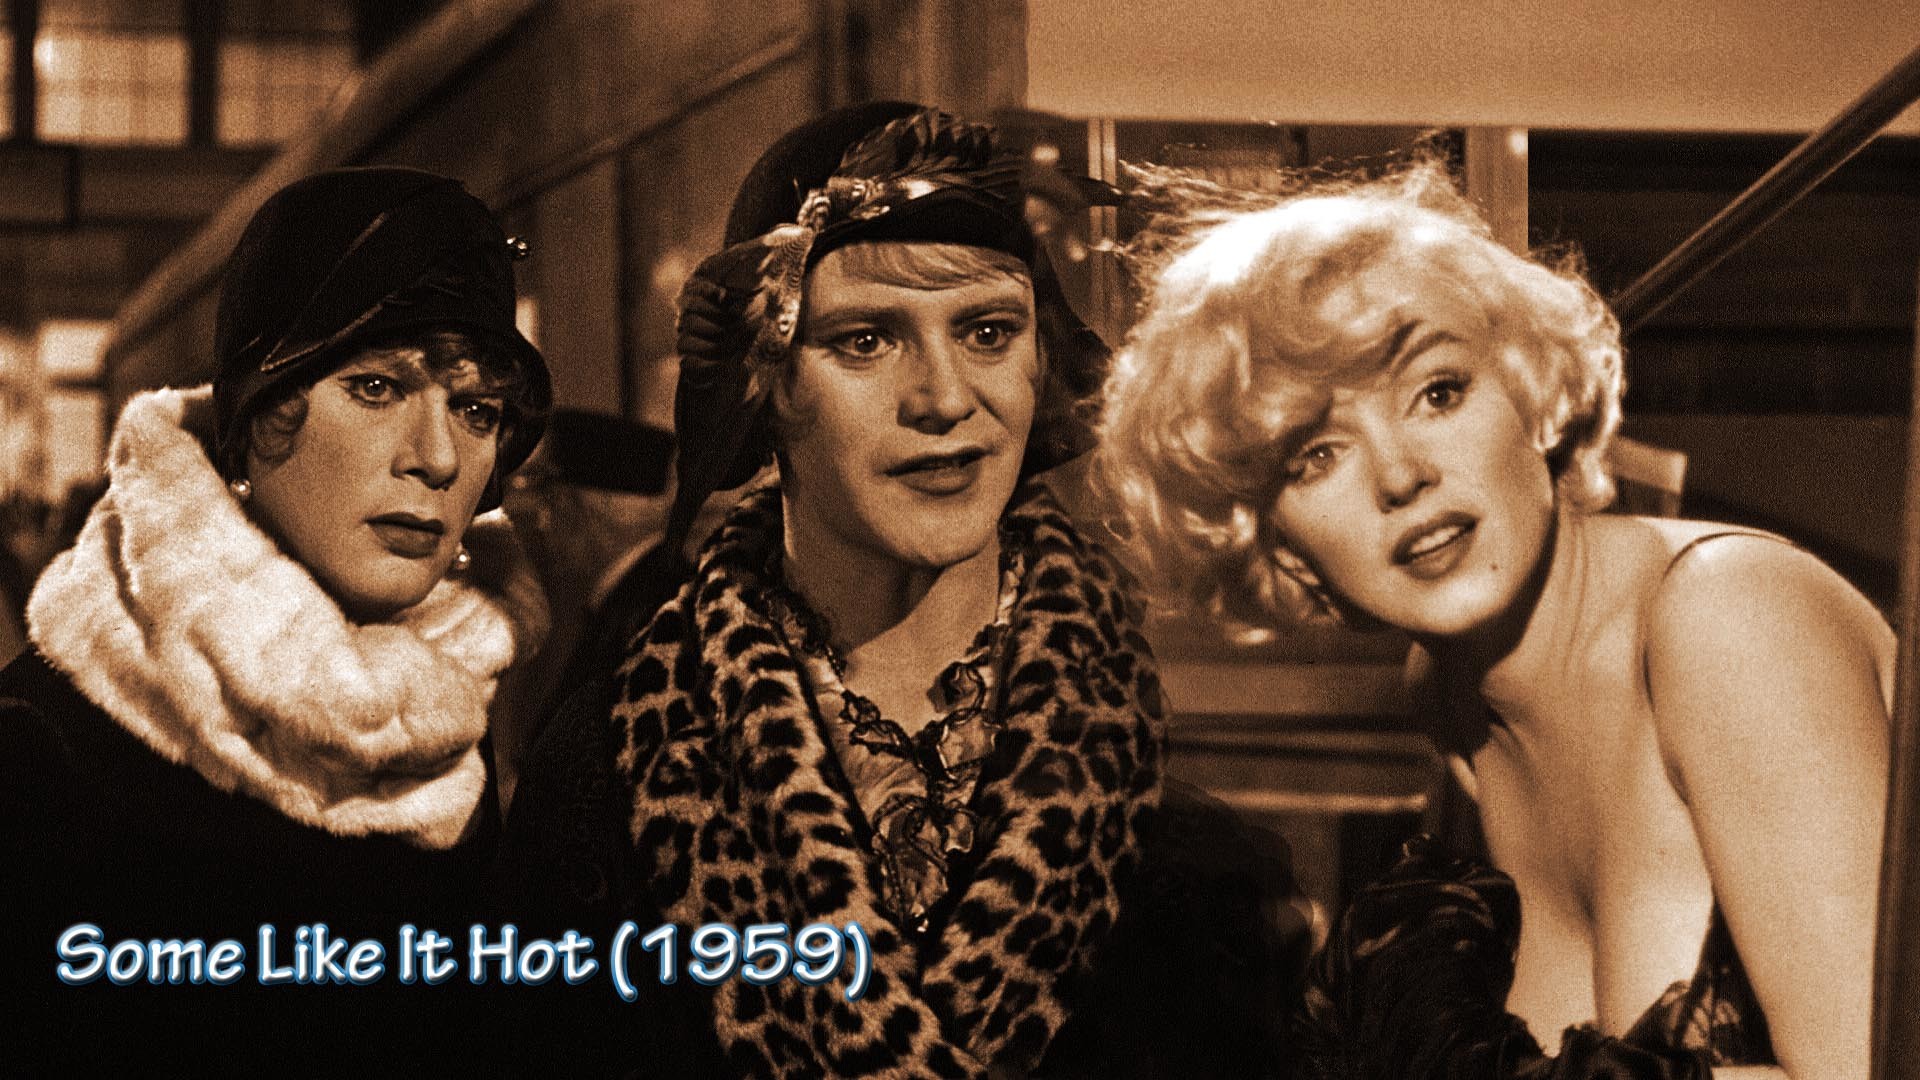 1920x1080 Some Like It Hot 1959 - Classic Movies Wallpaper (33682338) - Fanpop